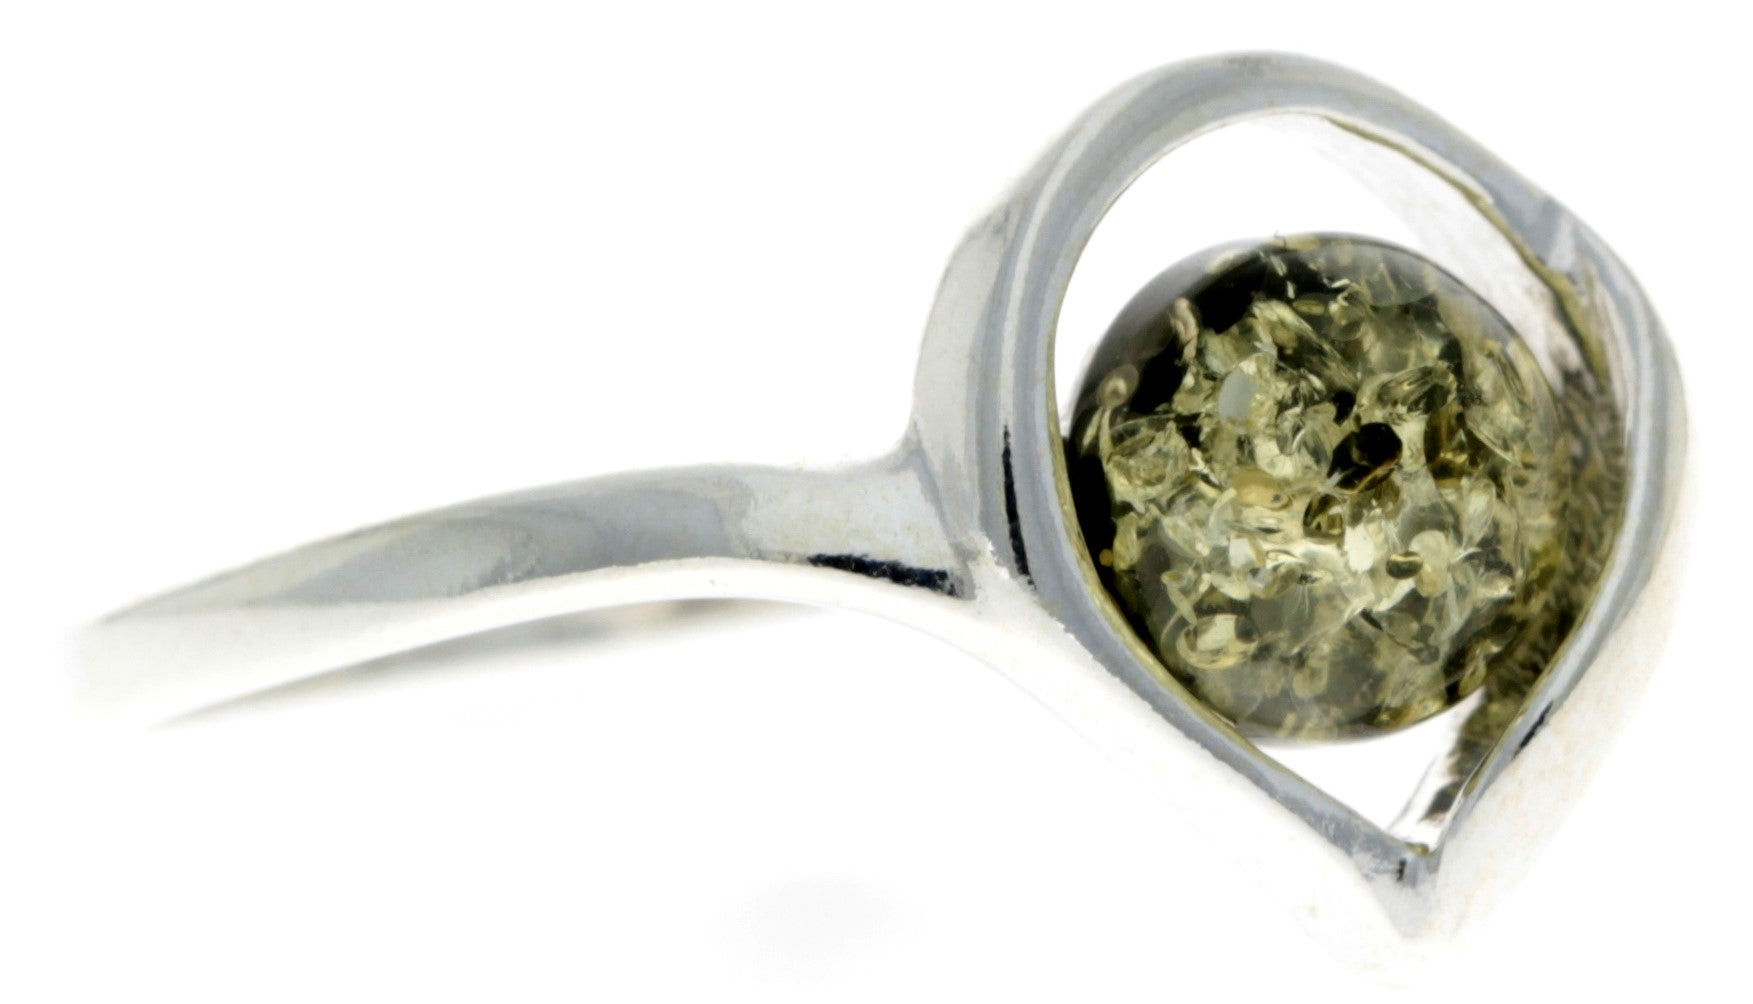 925 Sterling Silver & Baltic Amber Modern Designer Ring - GL725